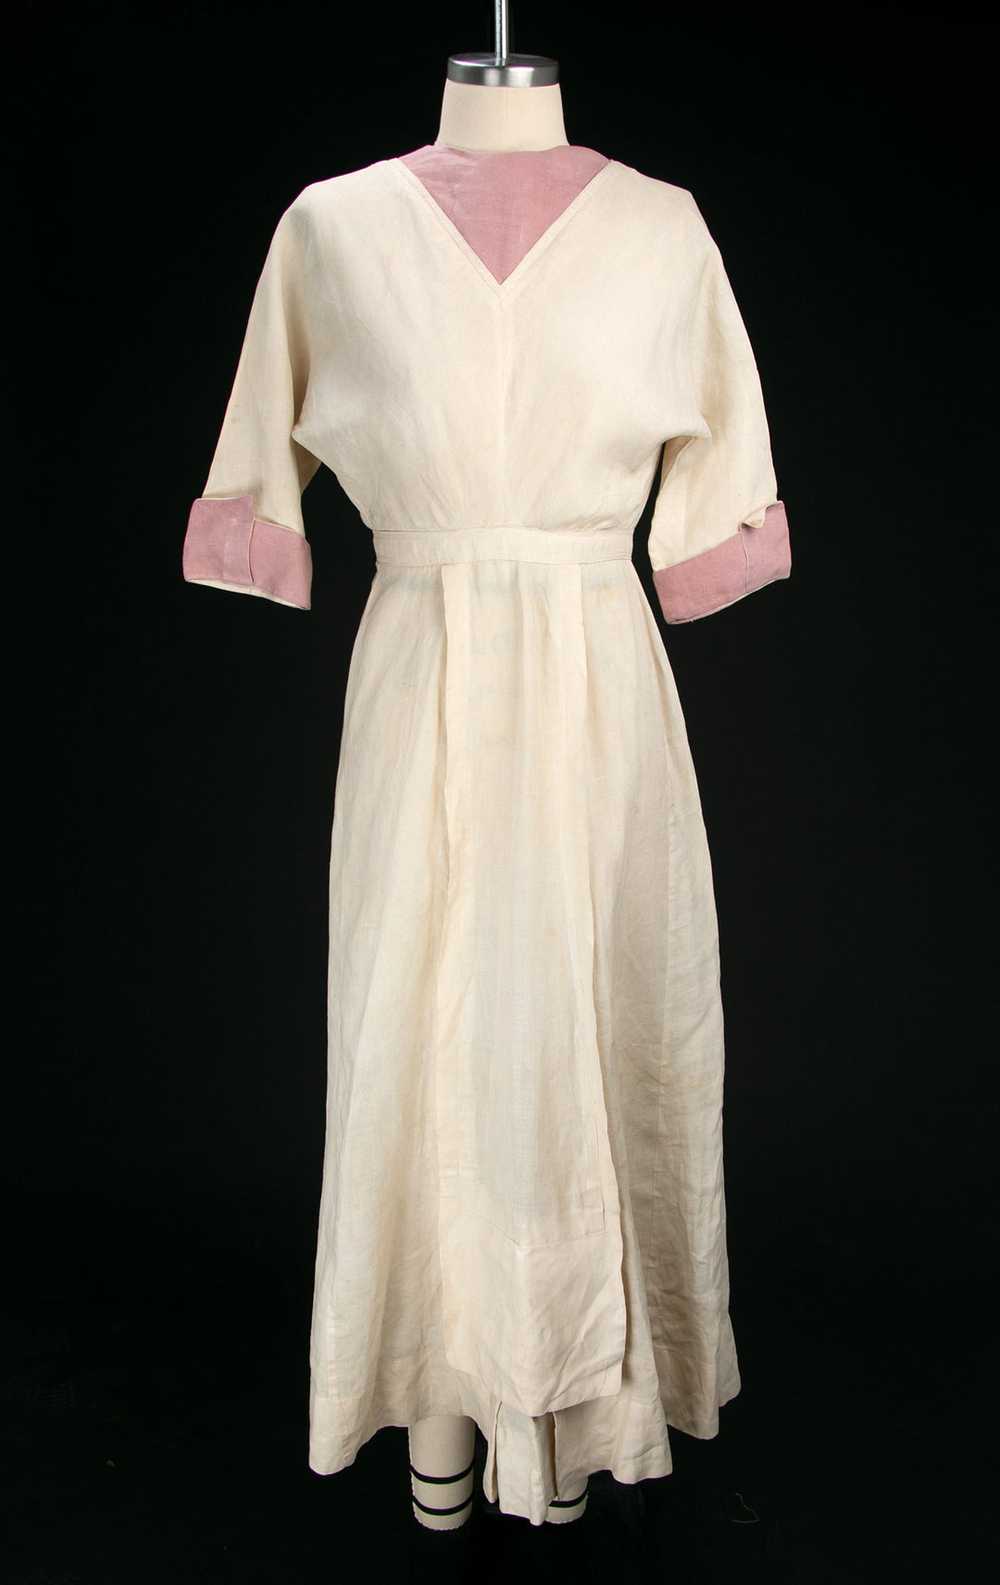 Antique Edwardian Era Cream Colored Linen Dress - image 9